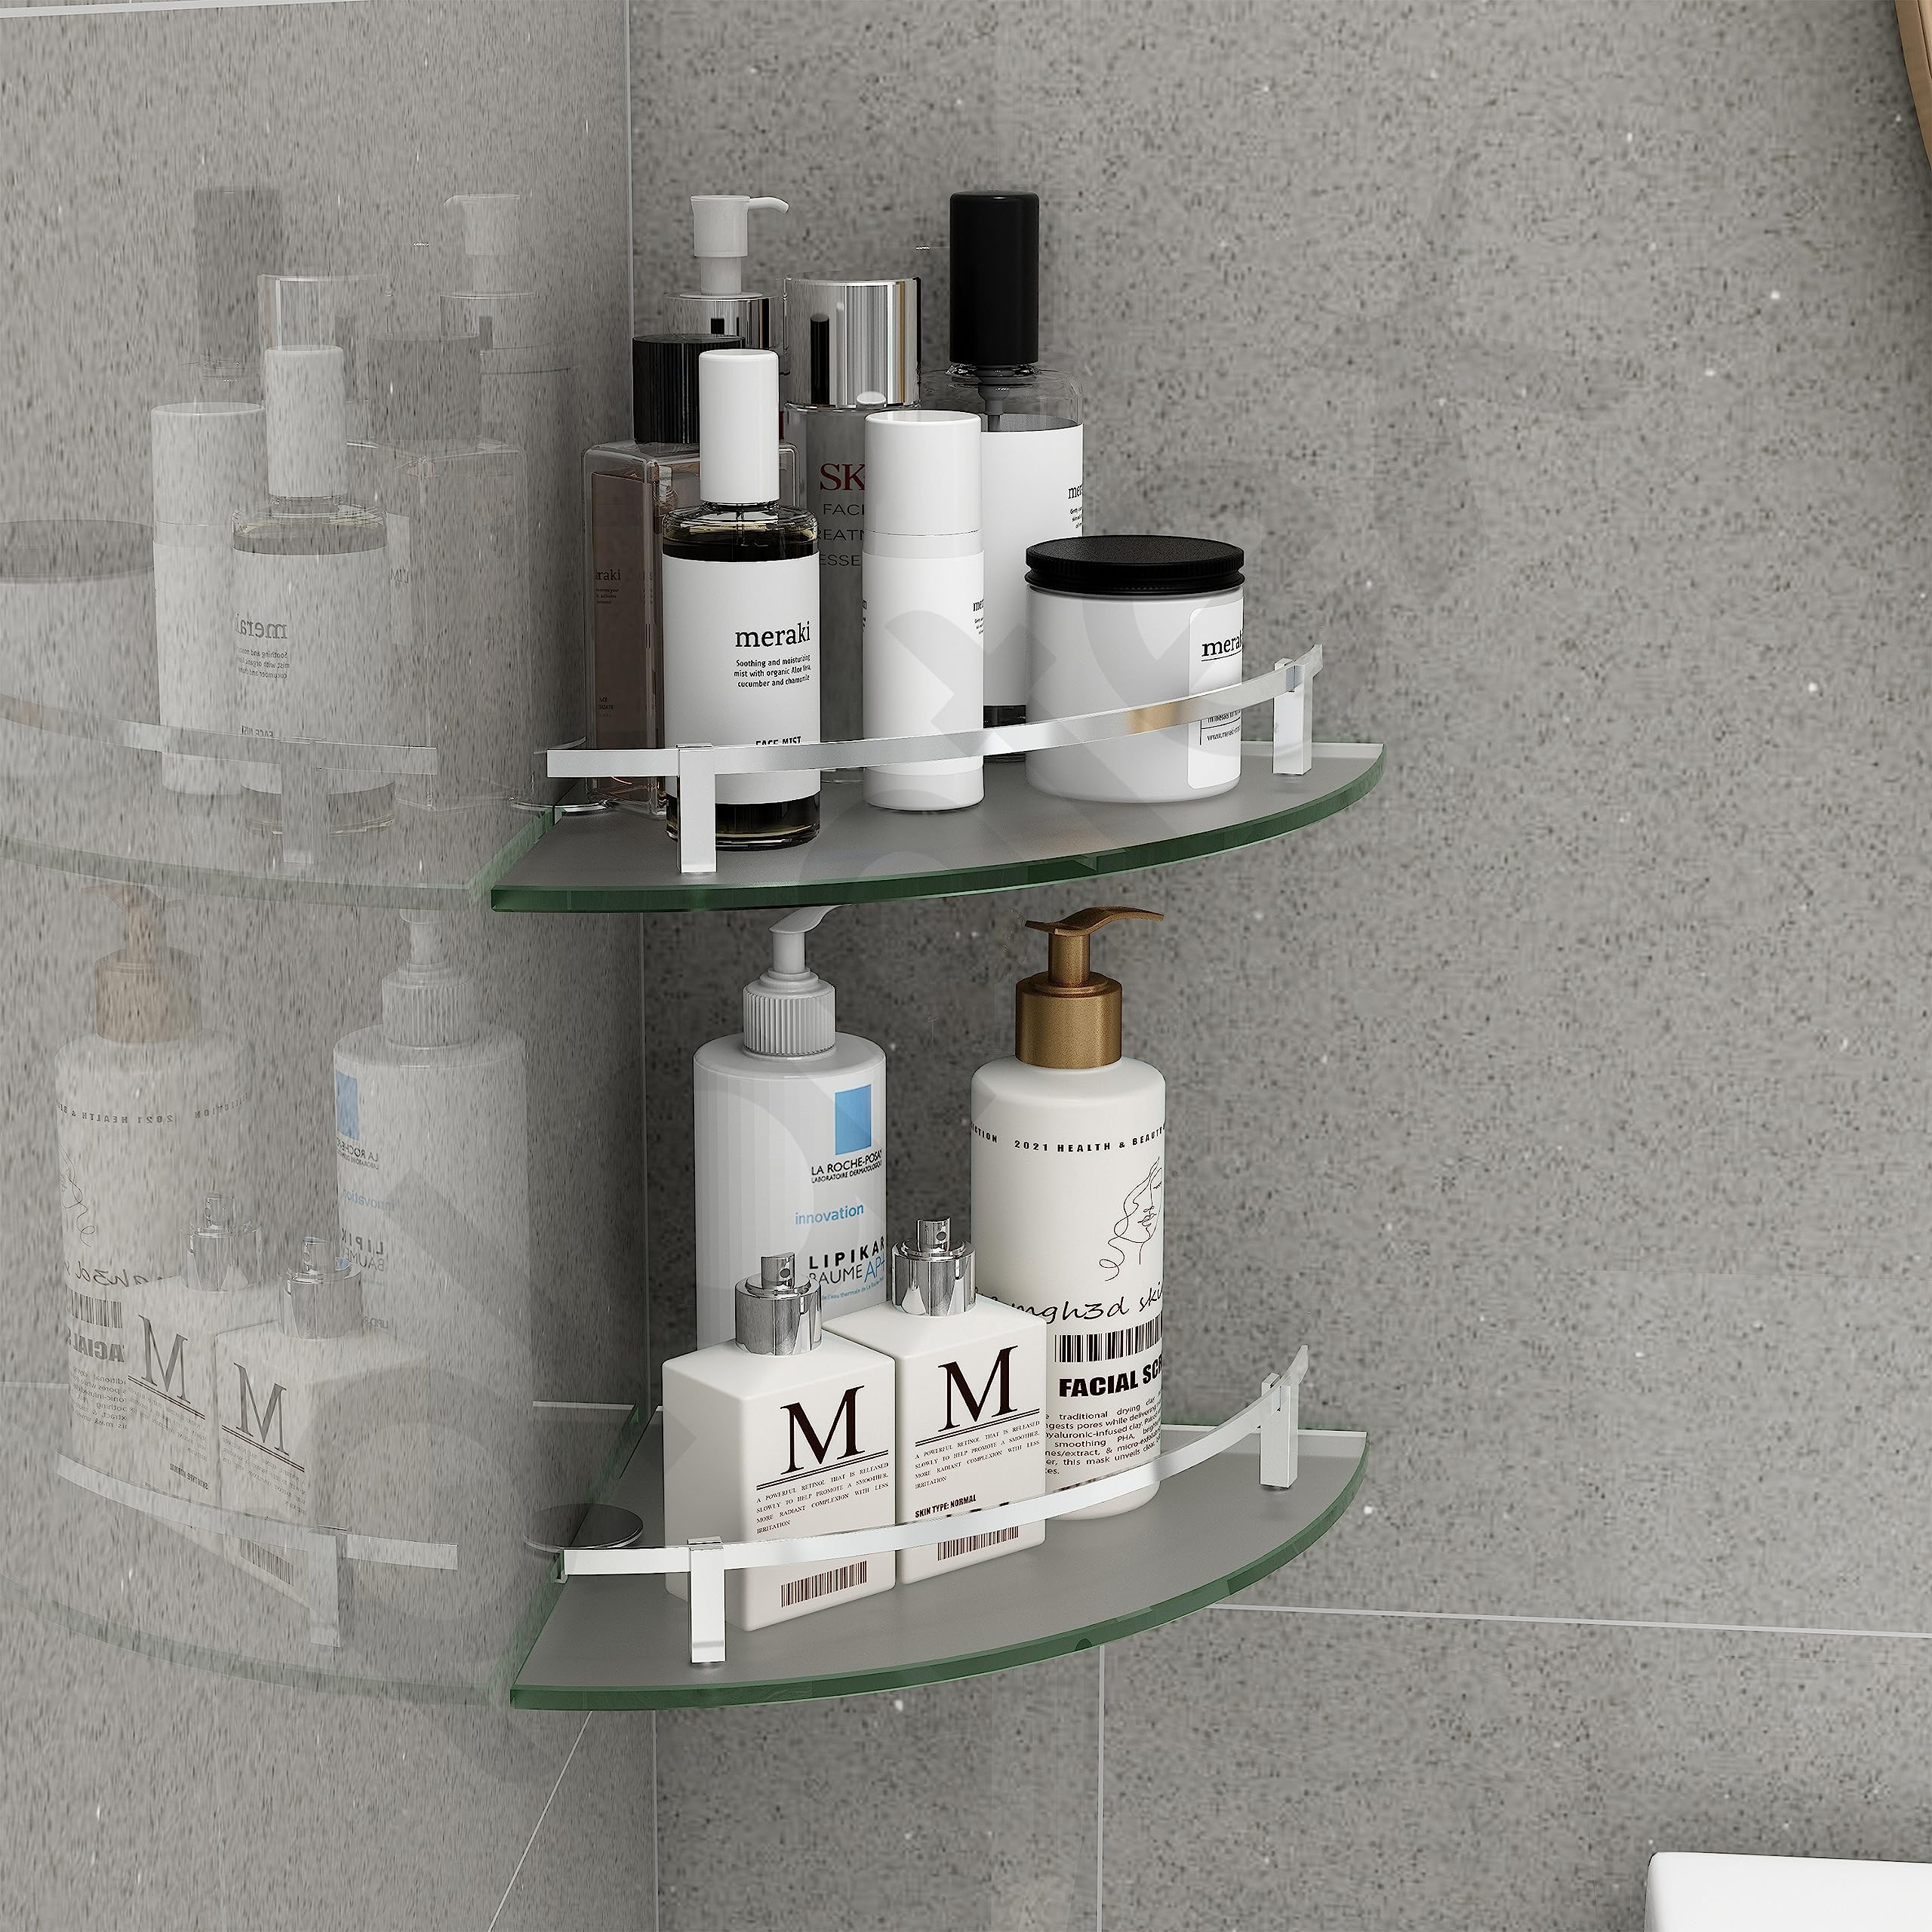 Plantex Premium Frosted Glass Corner/Shelf for Bathroom/Wall Shelf/Storage Shelf (9x9 Inches) - Pack of 2 (Silver Matt)